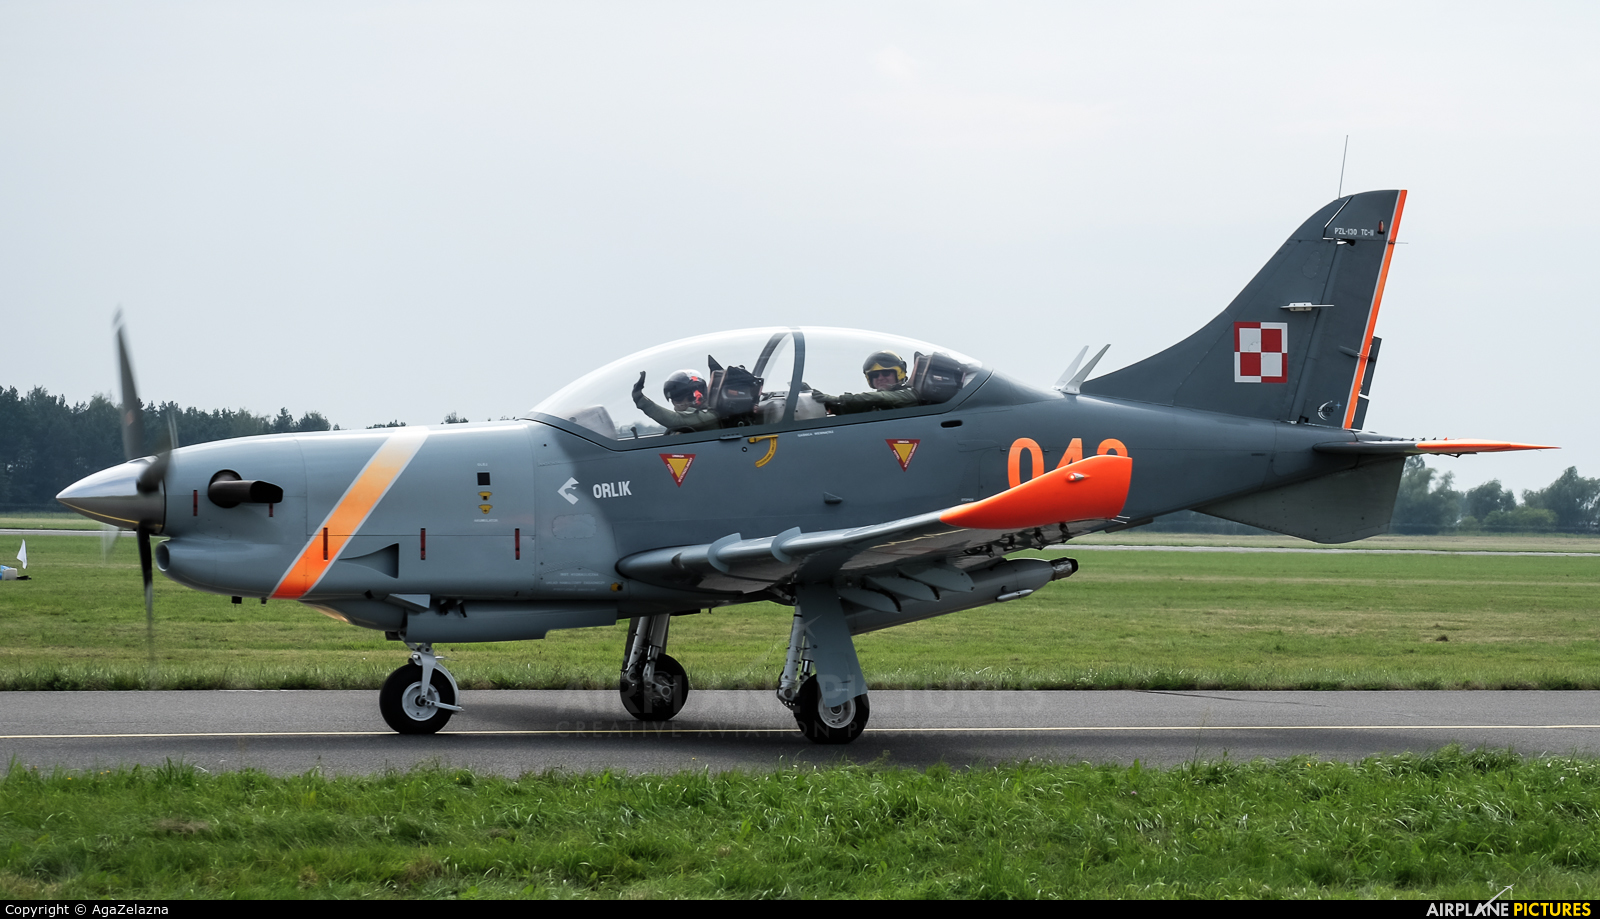 Poland - Air Force "Orlik Acrobatic Group" 043 aircraft at Radom - Sadków